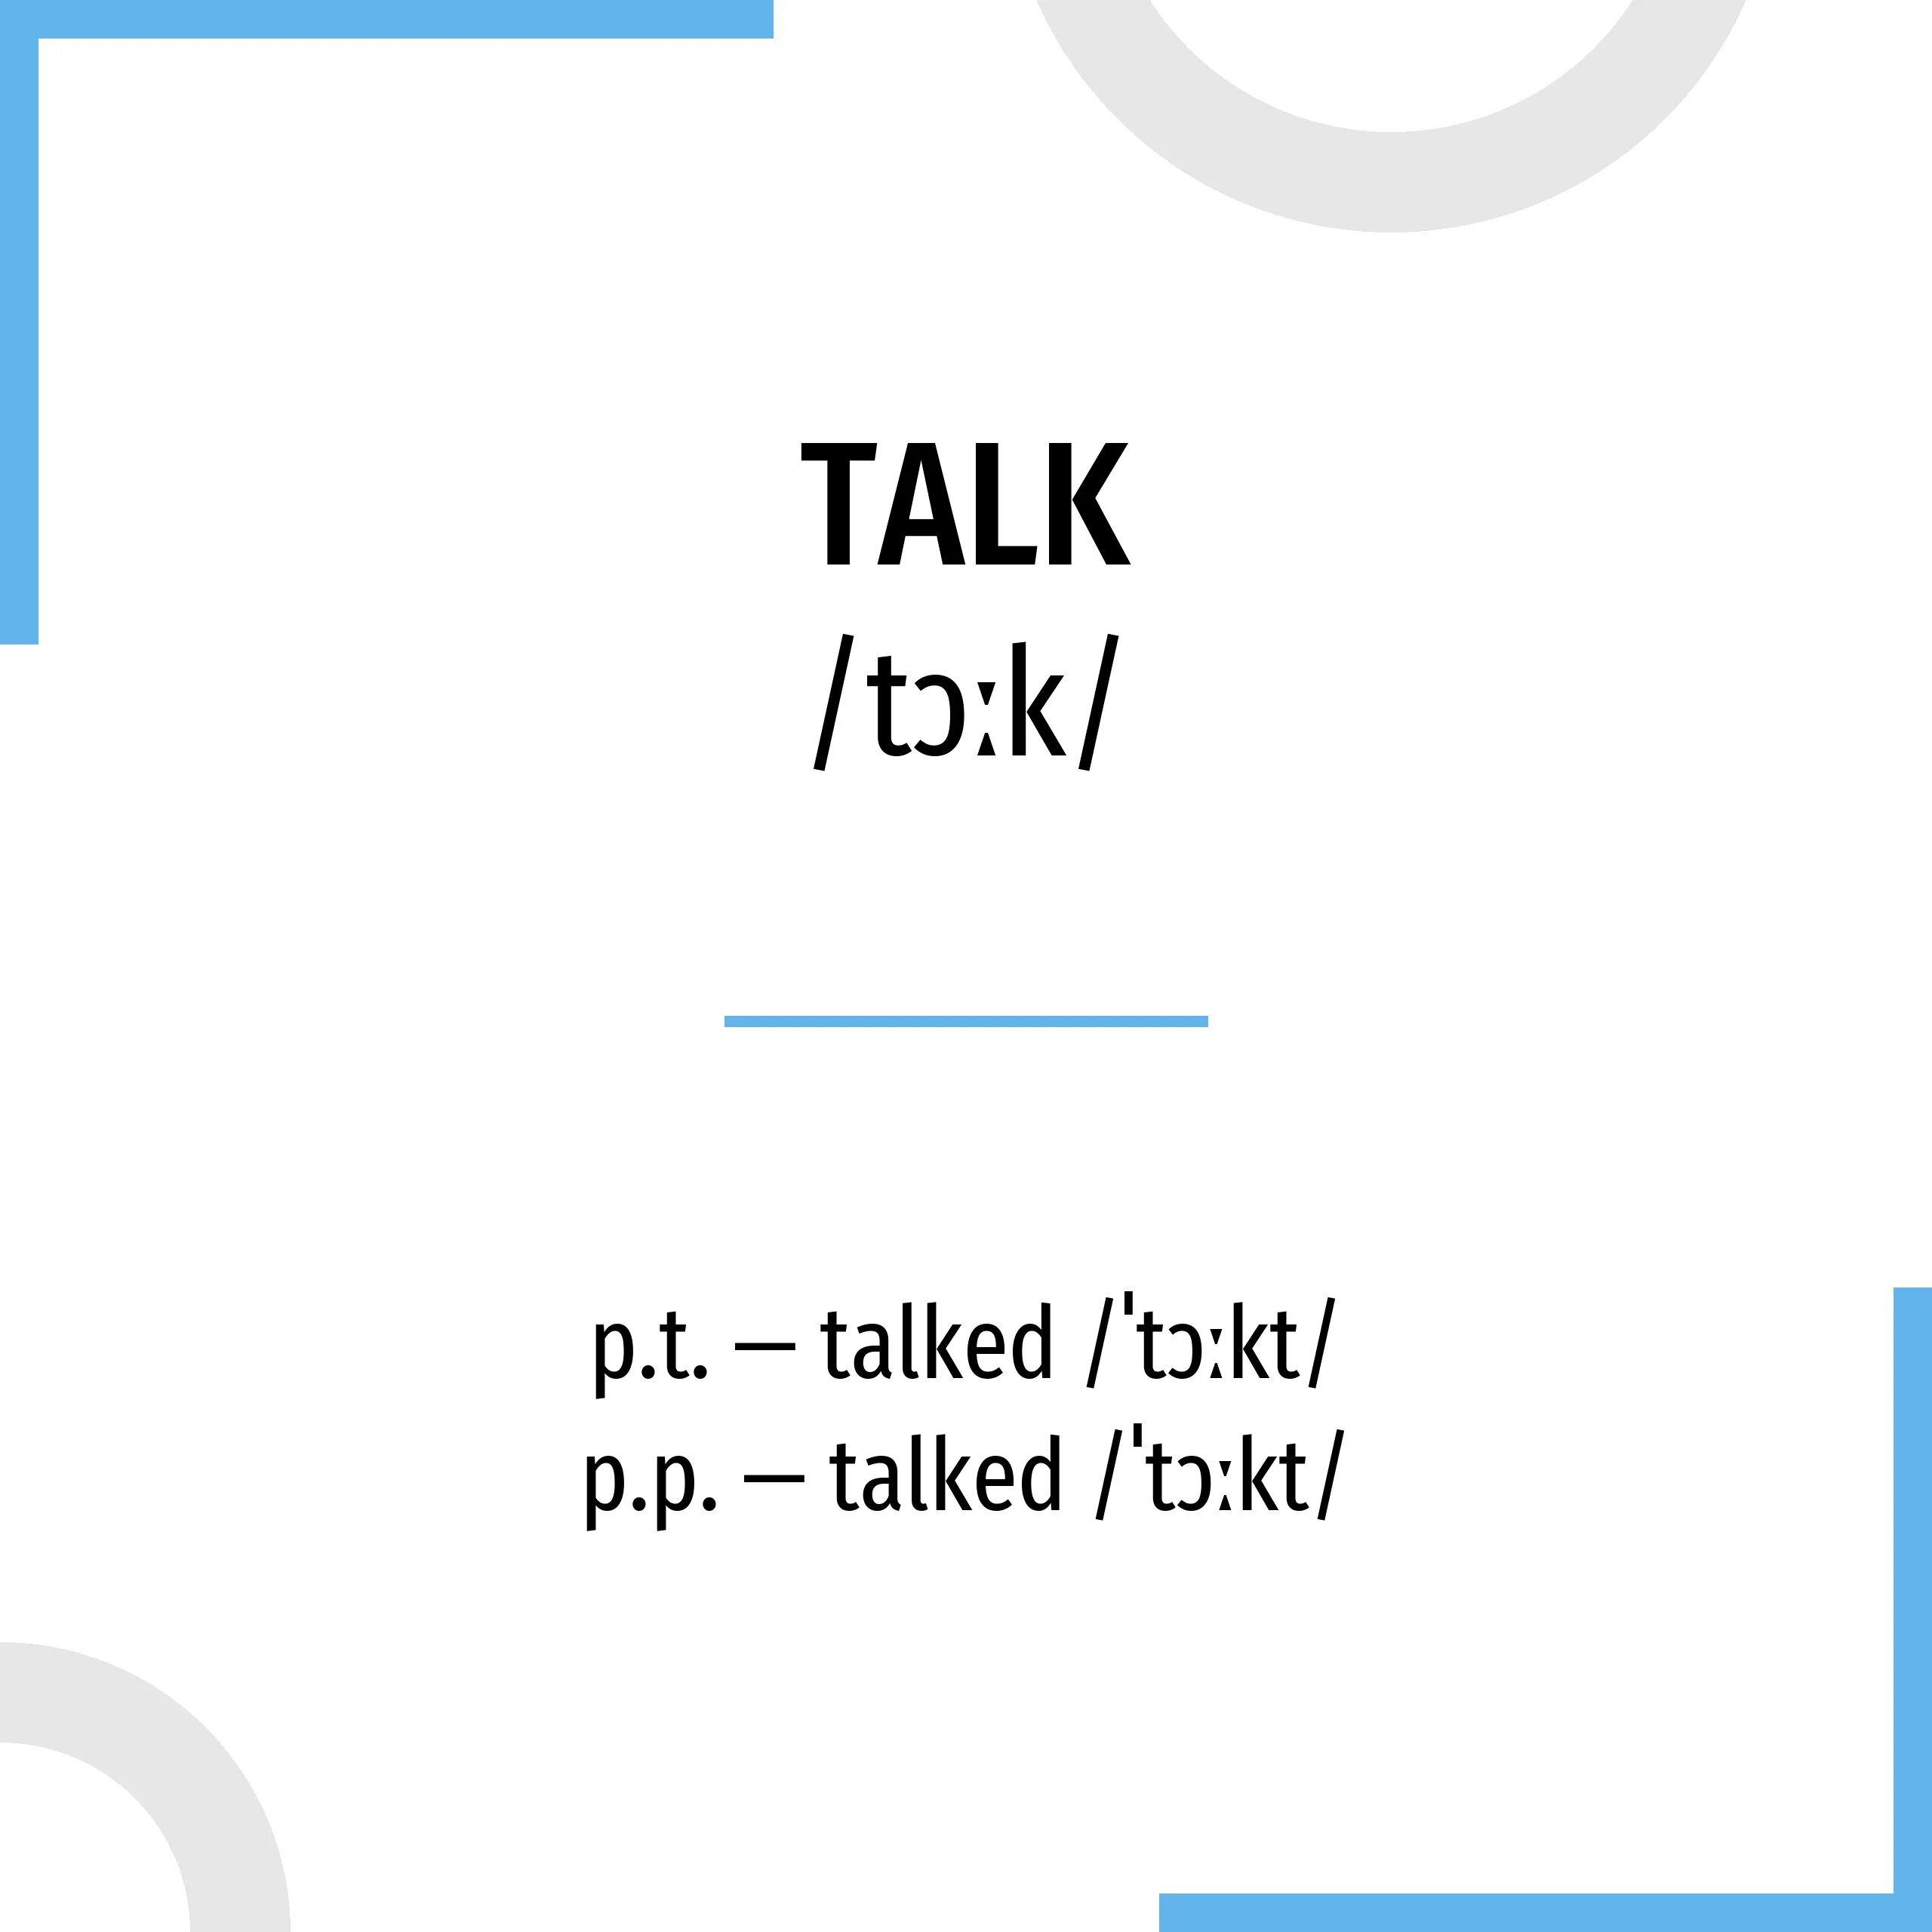 Talk в past. Talk 3 формы. Три формы глагола talk. Talk past simple форма. Три формы глагола talk в английском языке.